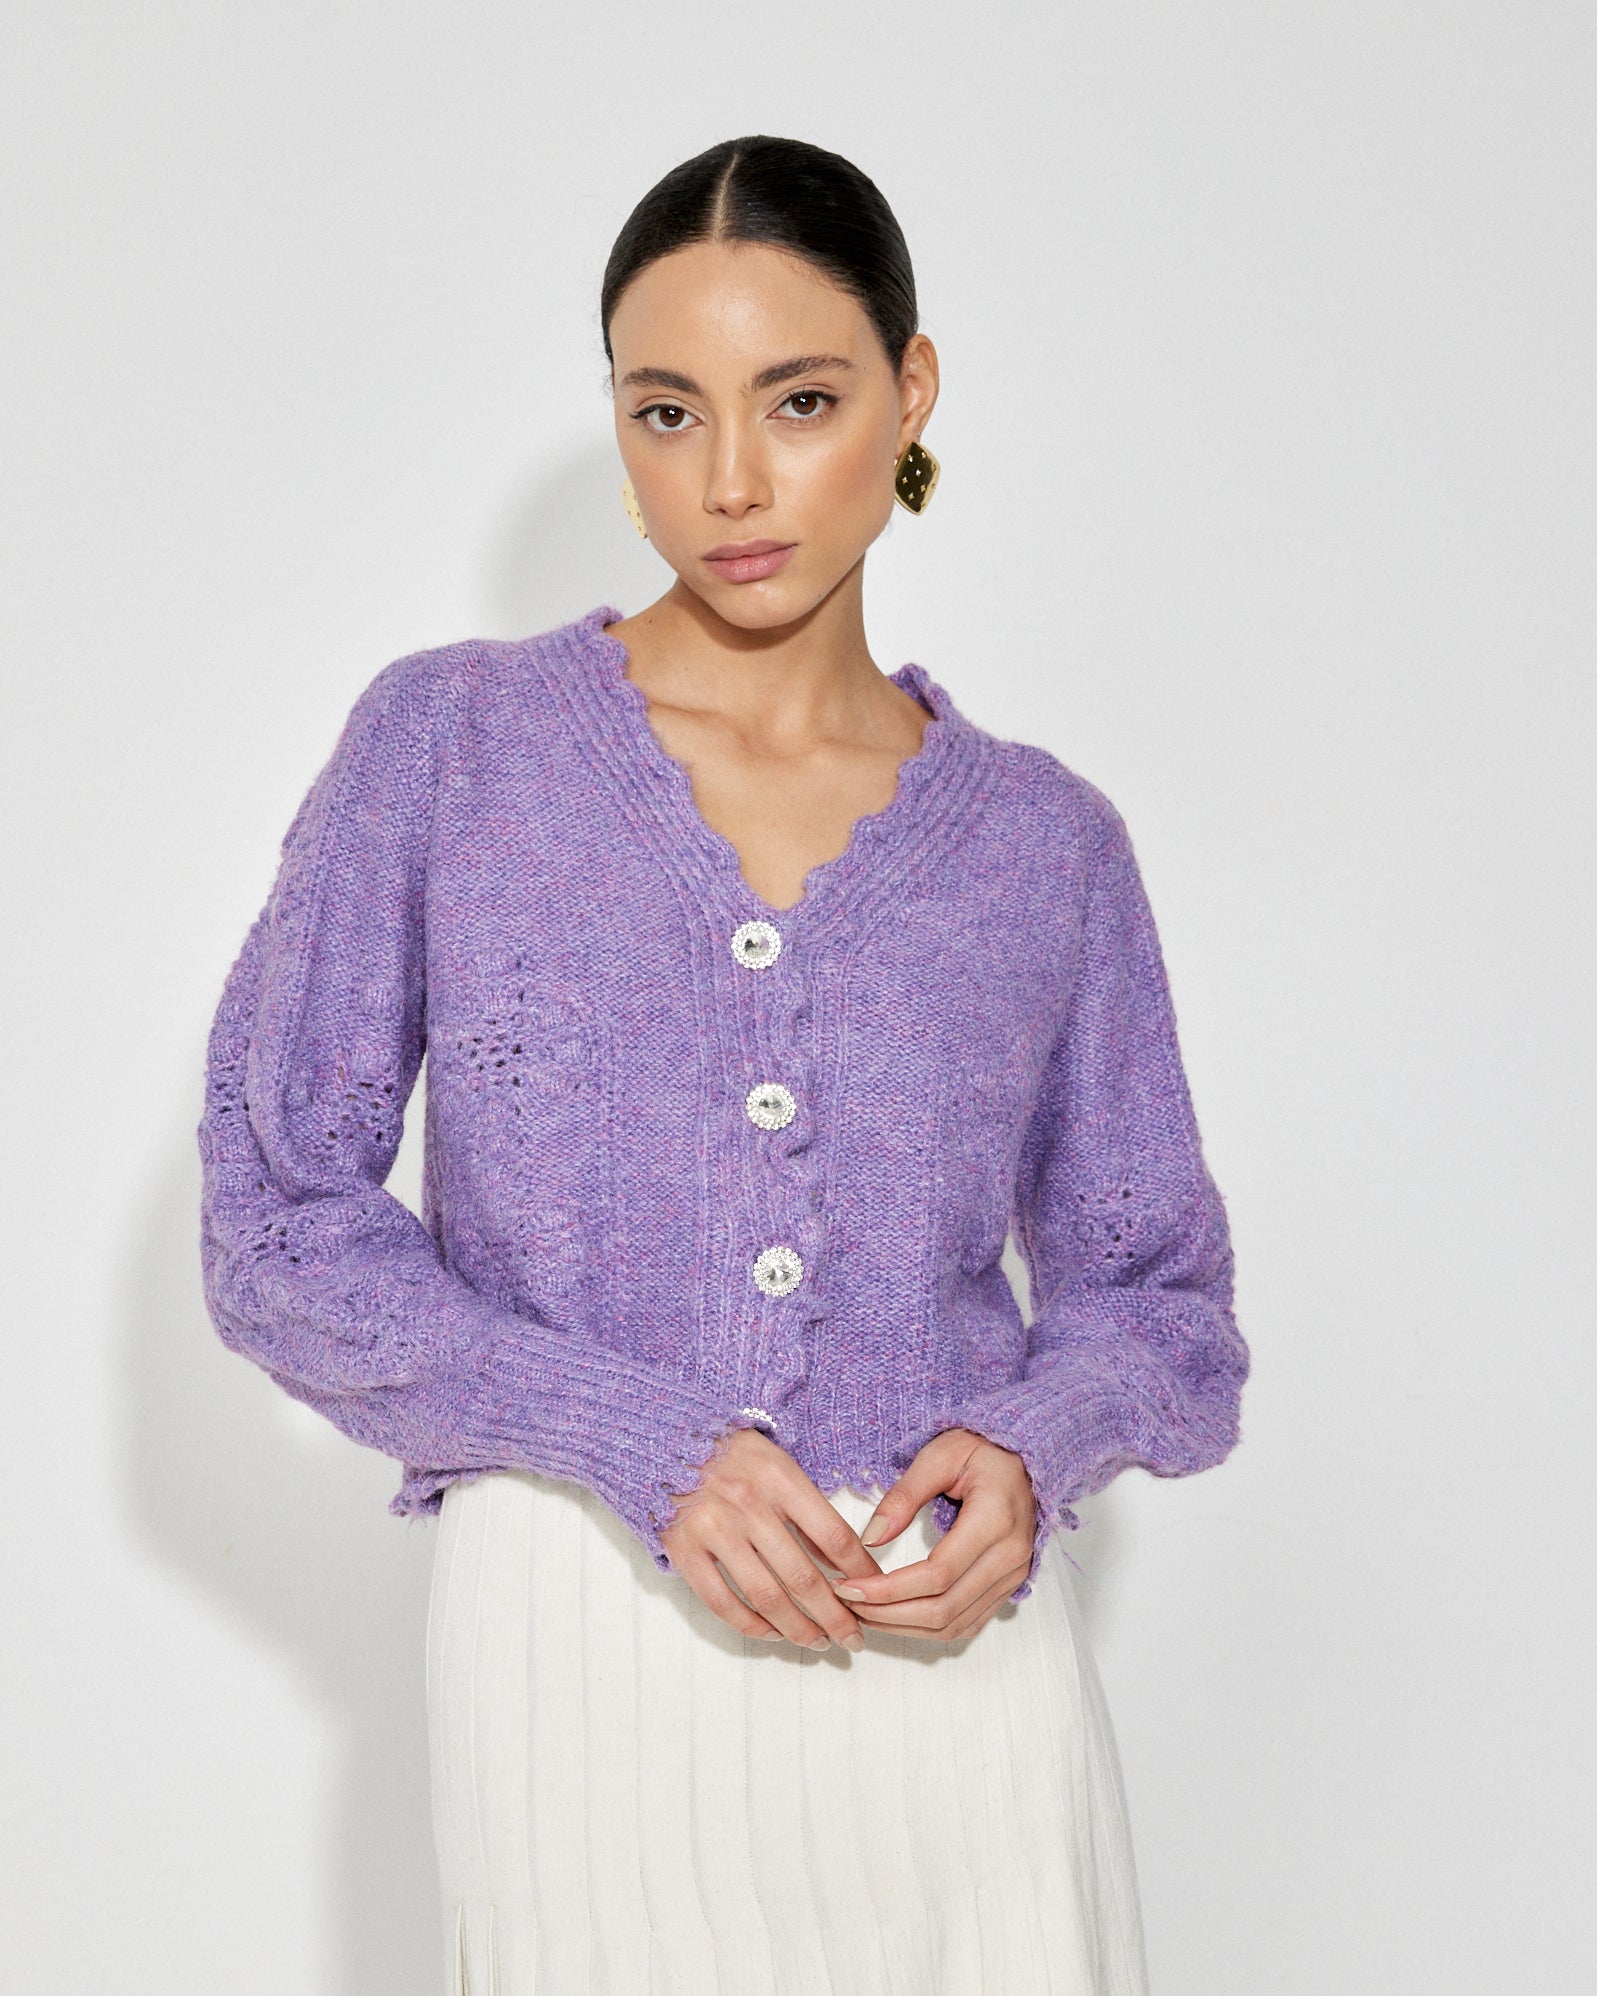 The Lavender Knit